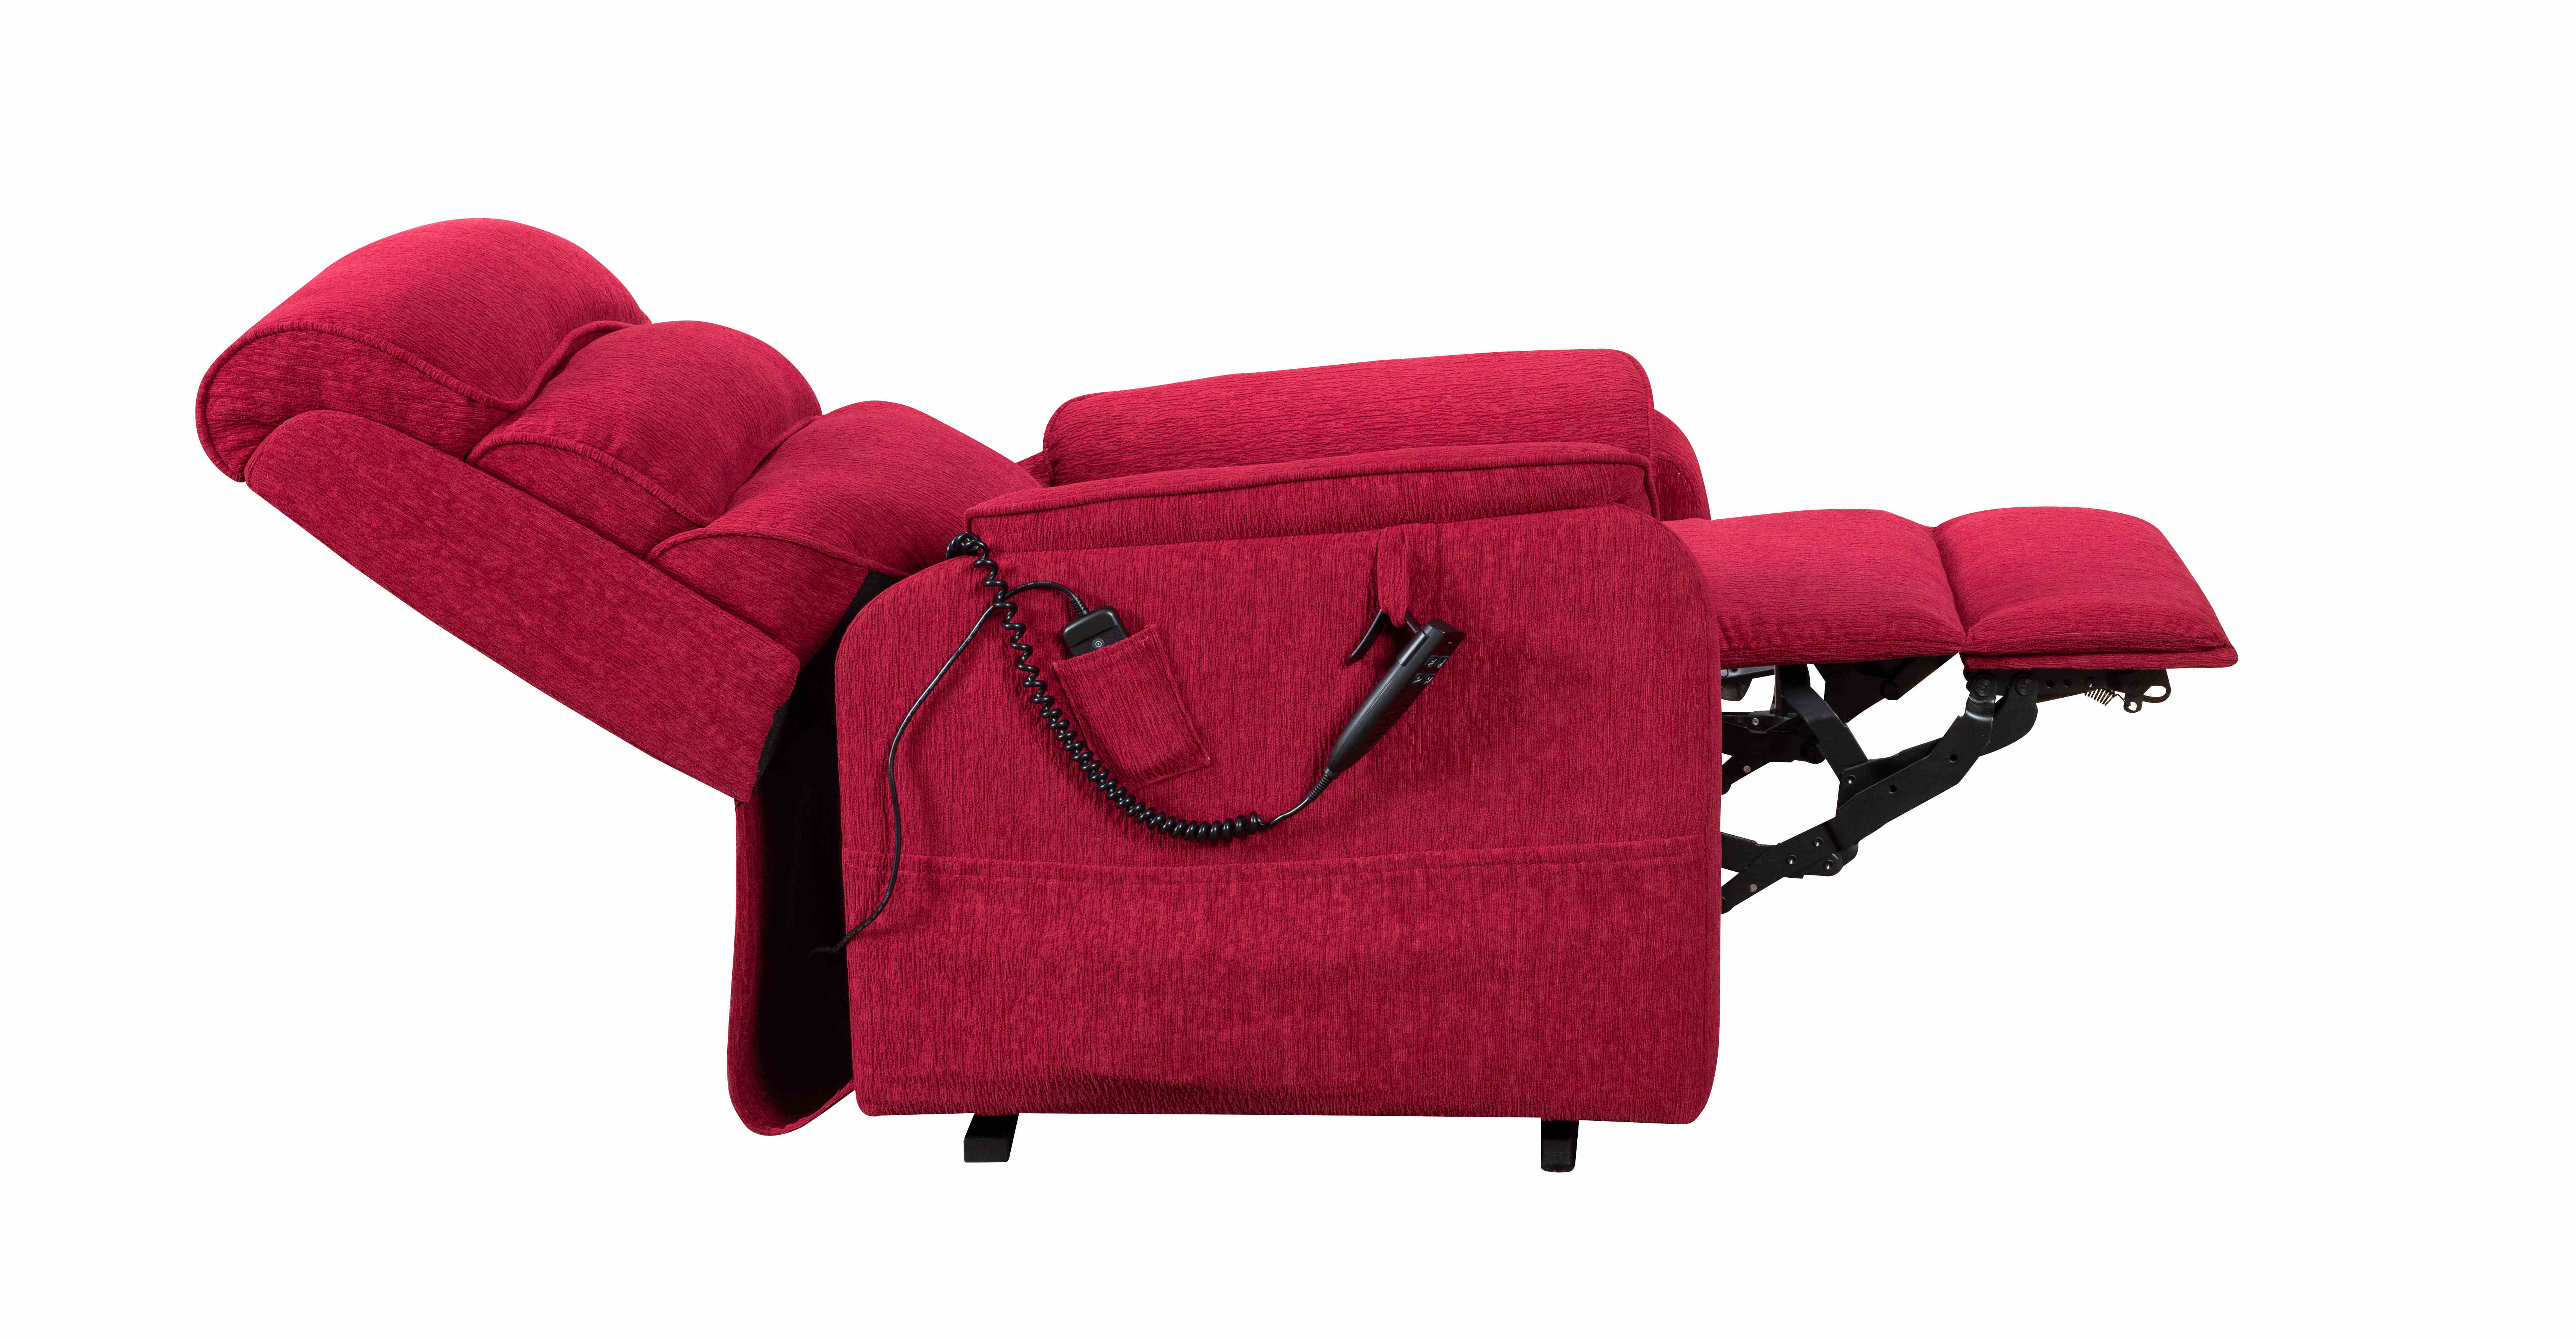 Lift Recliner Massage Sofa Chair YJ-31210